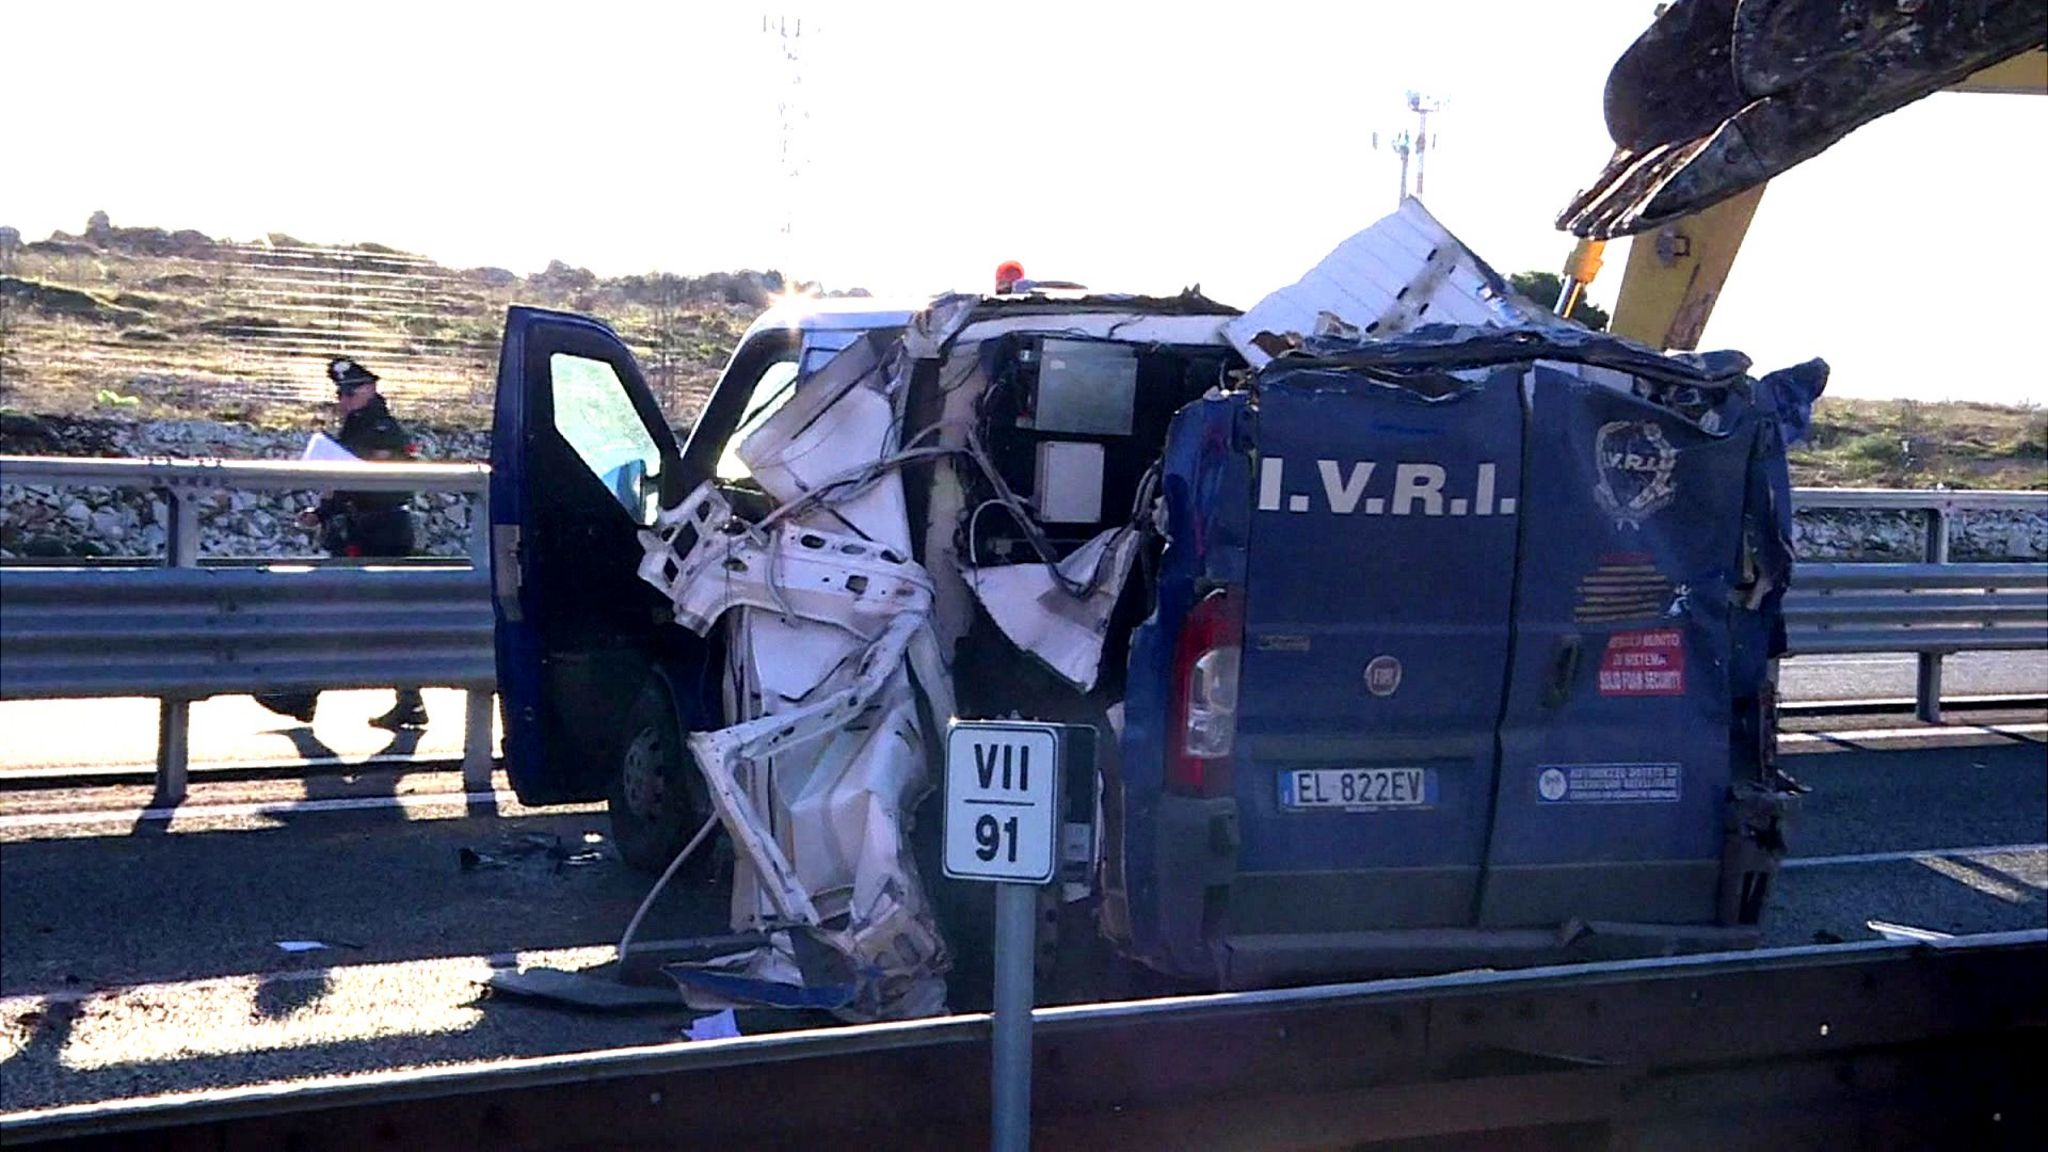 The damaged security van near Bari, southern Italy